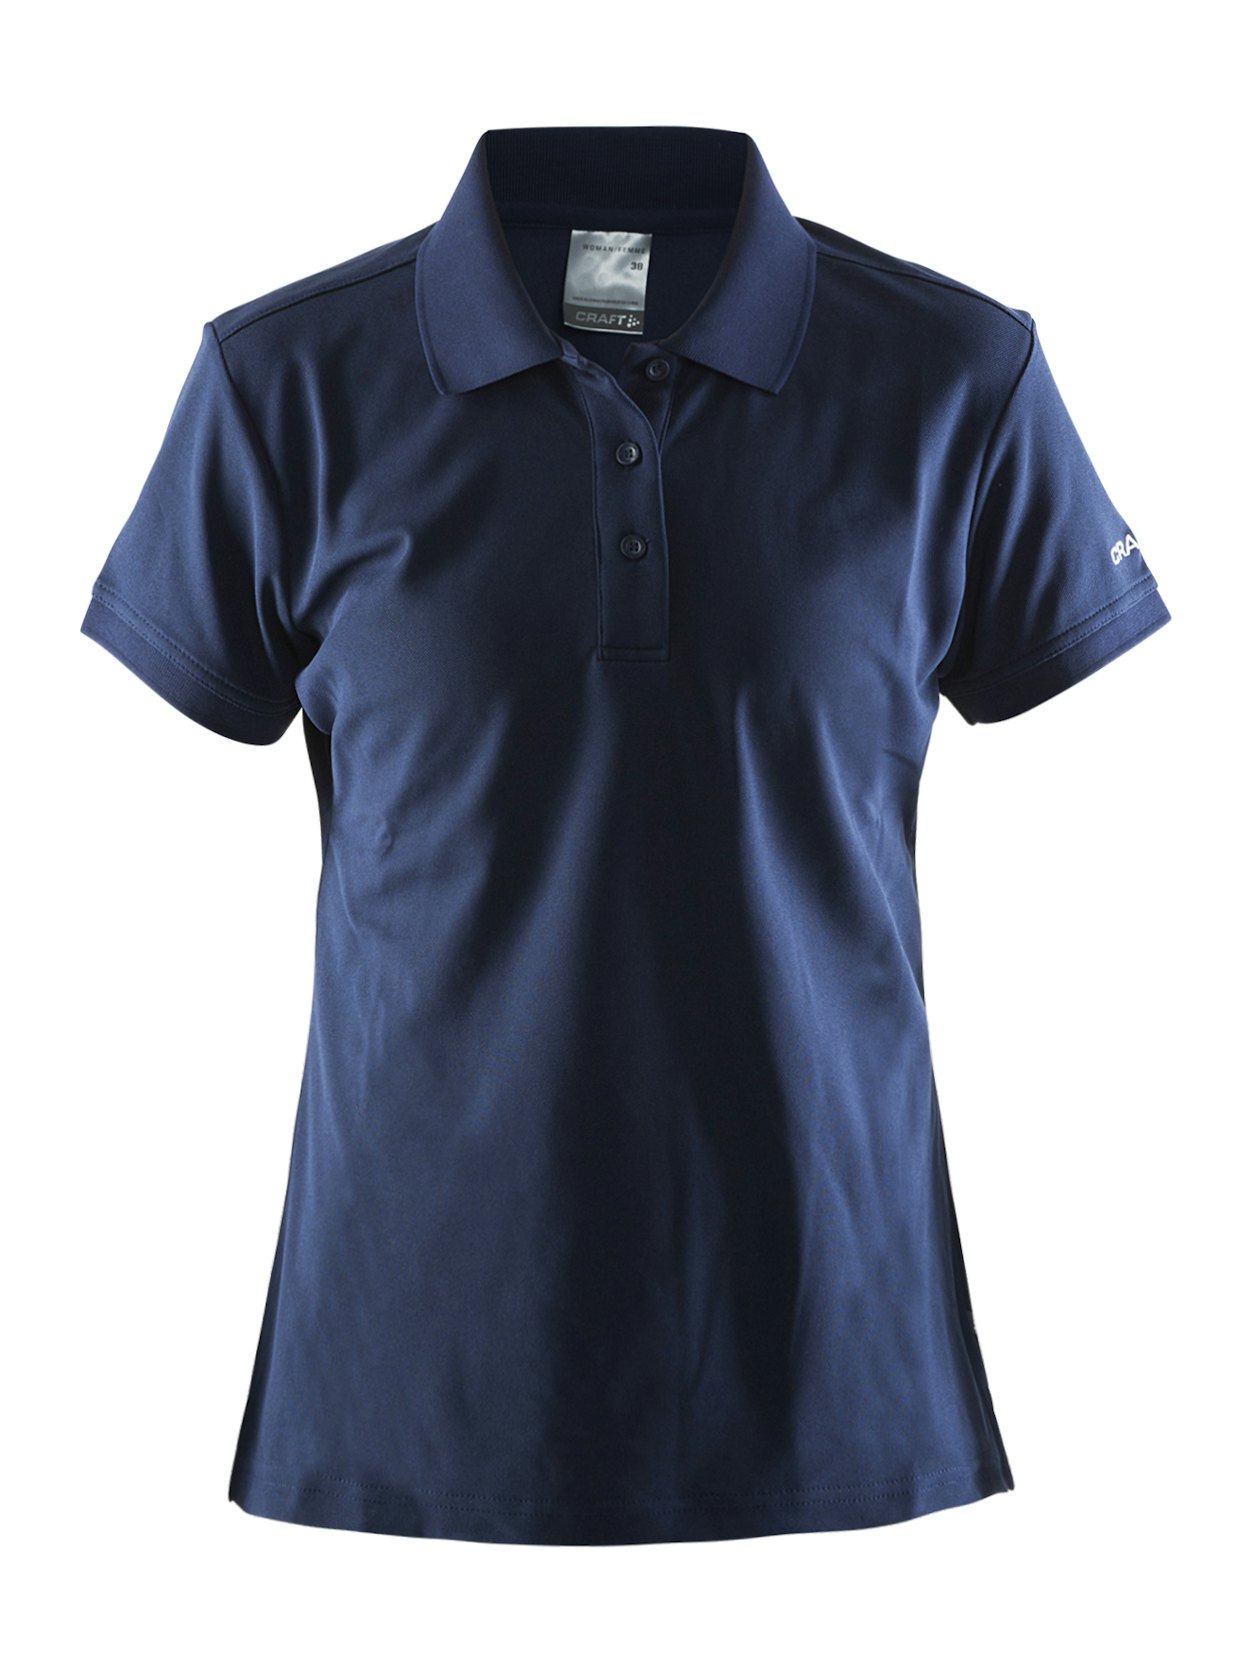  Polo  Shirt  Pique Classic W Navy blue Craft  Sportswear